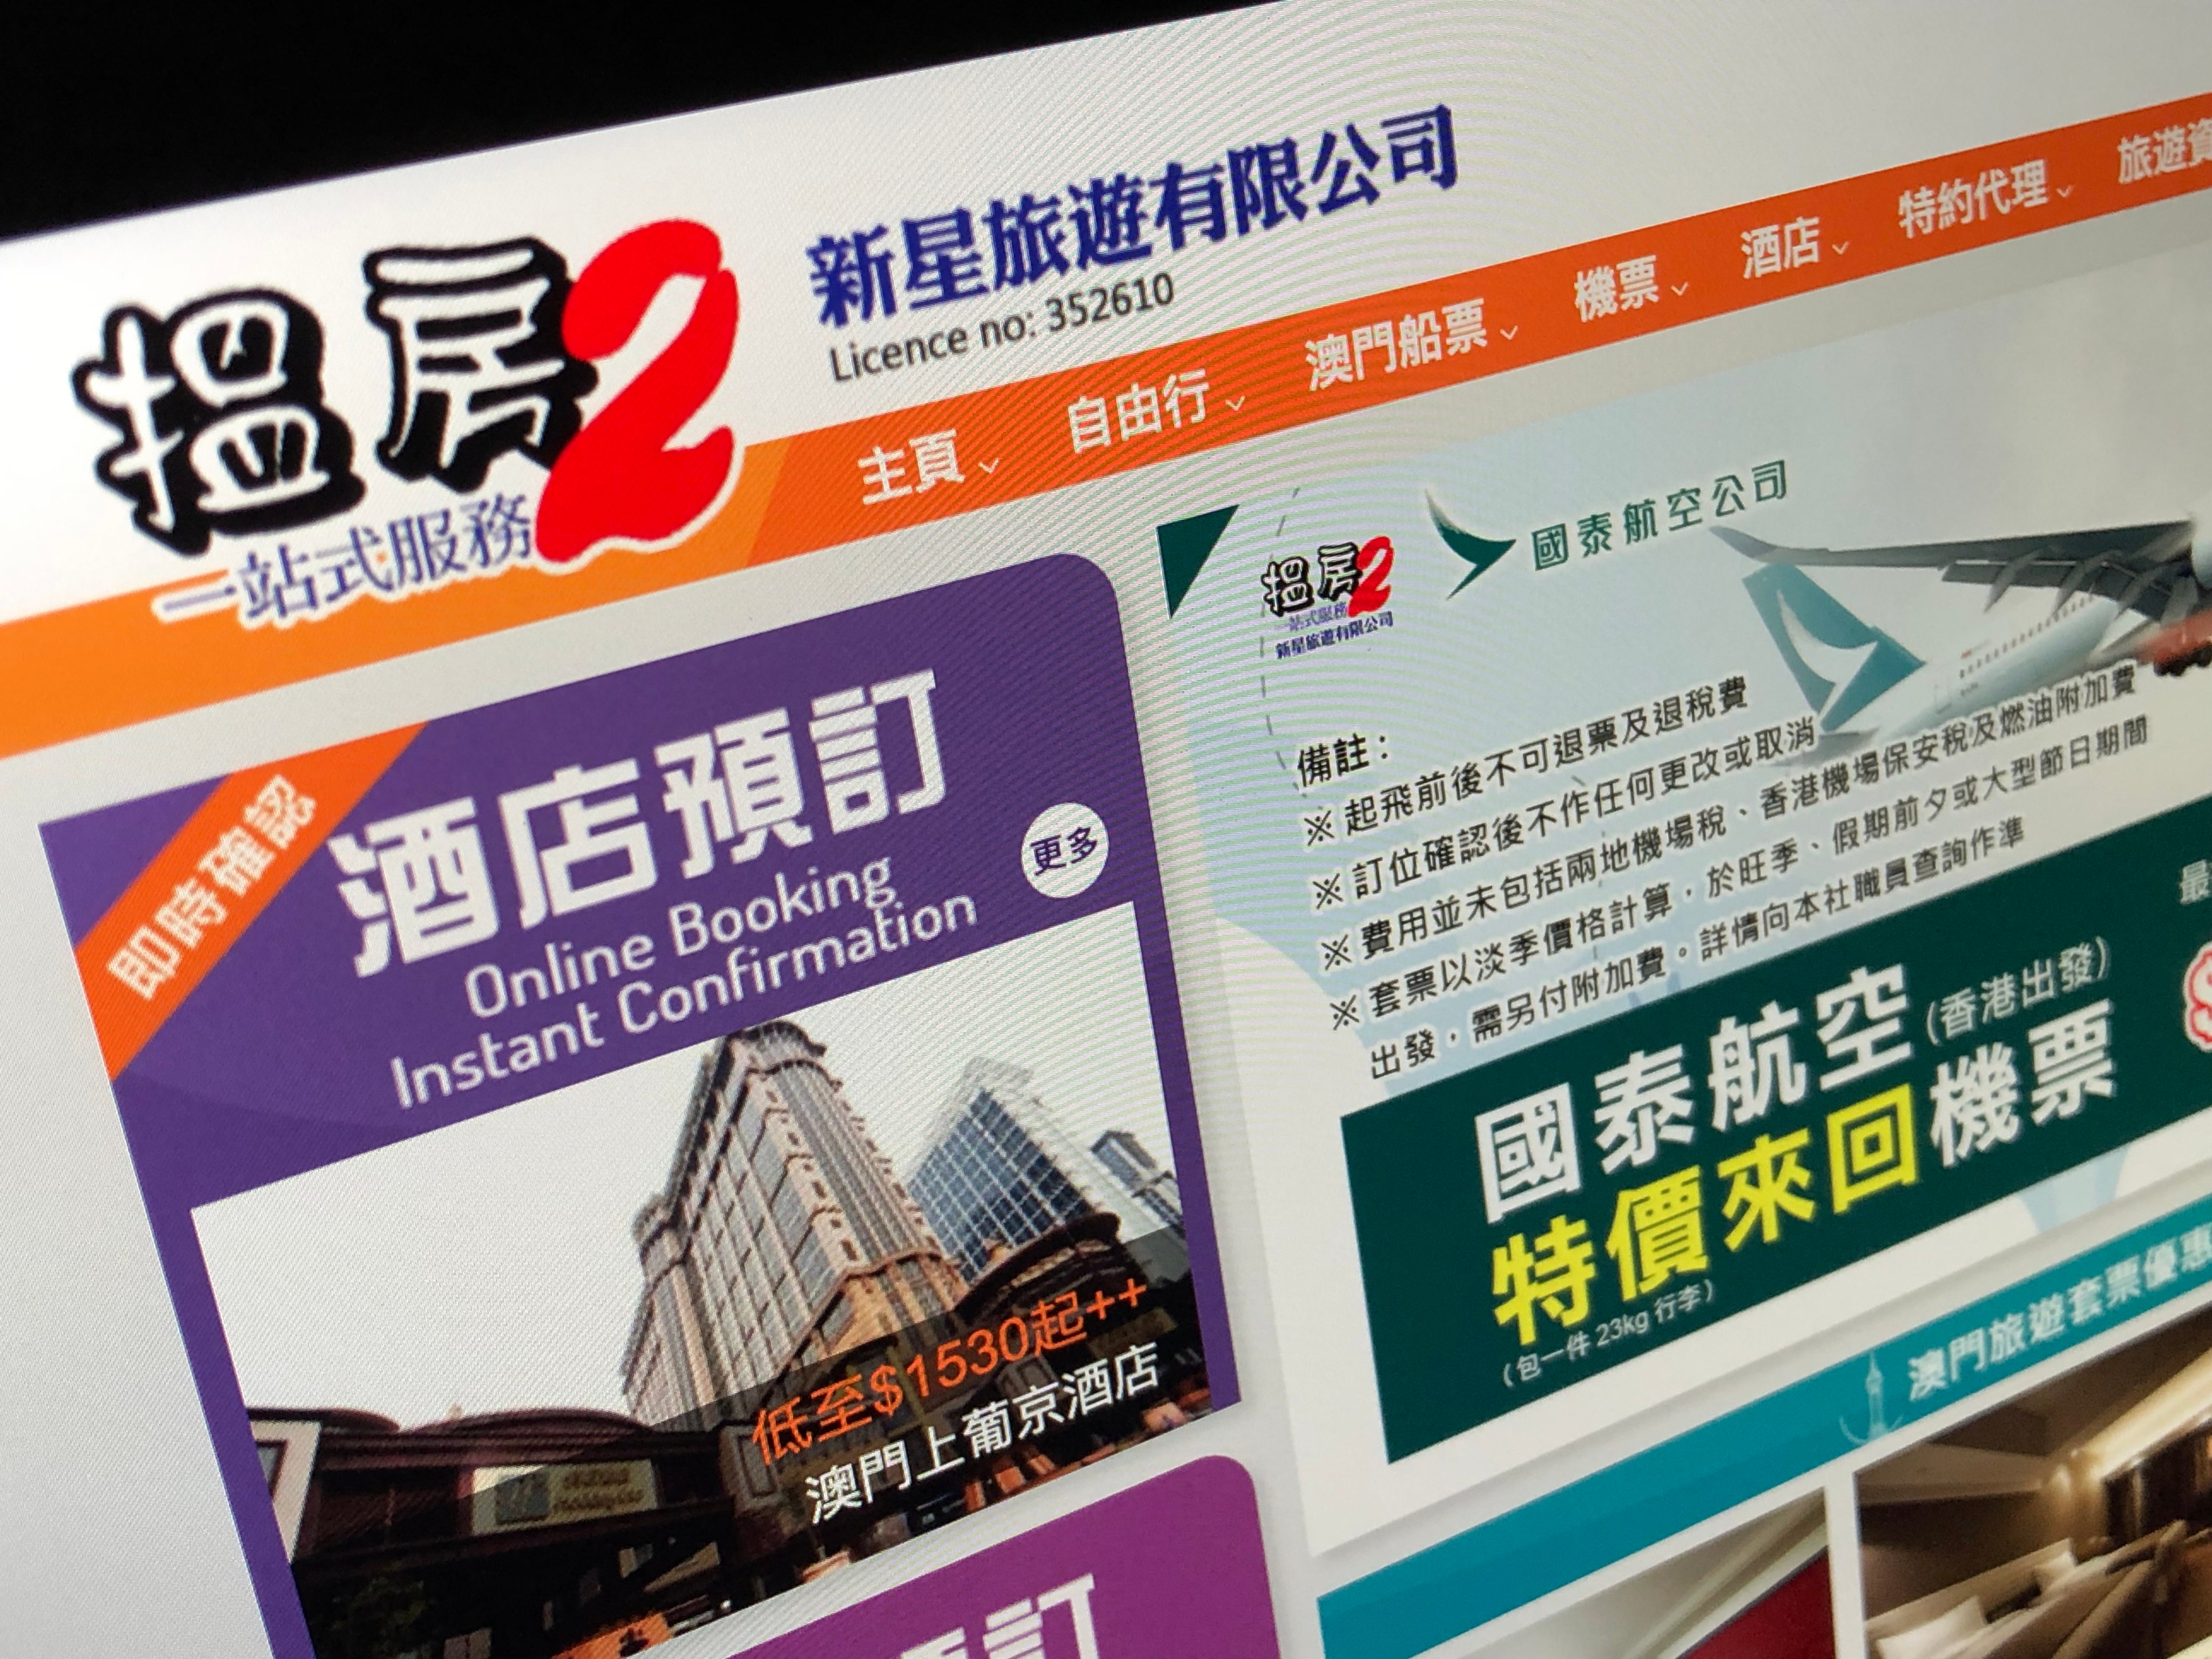 Tsim Sha Tsui-based travel agency New Star Travel had closed, blaming impact of the coronavirus and impostor scams. Photo: SCMP